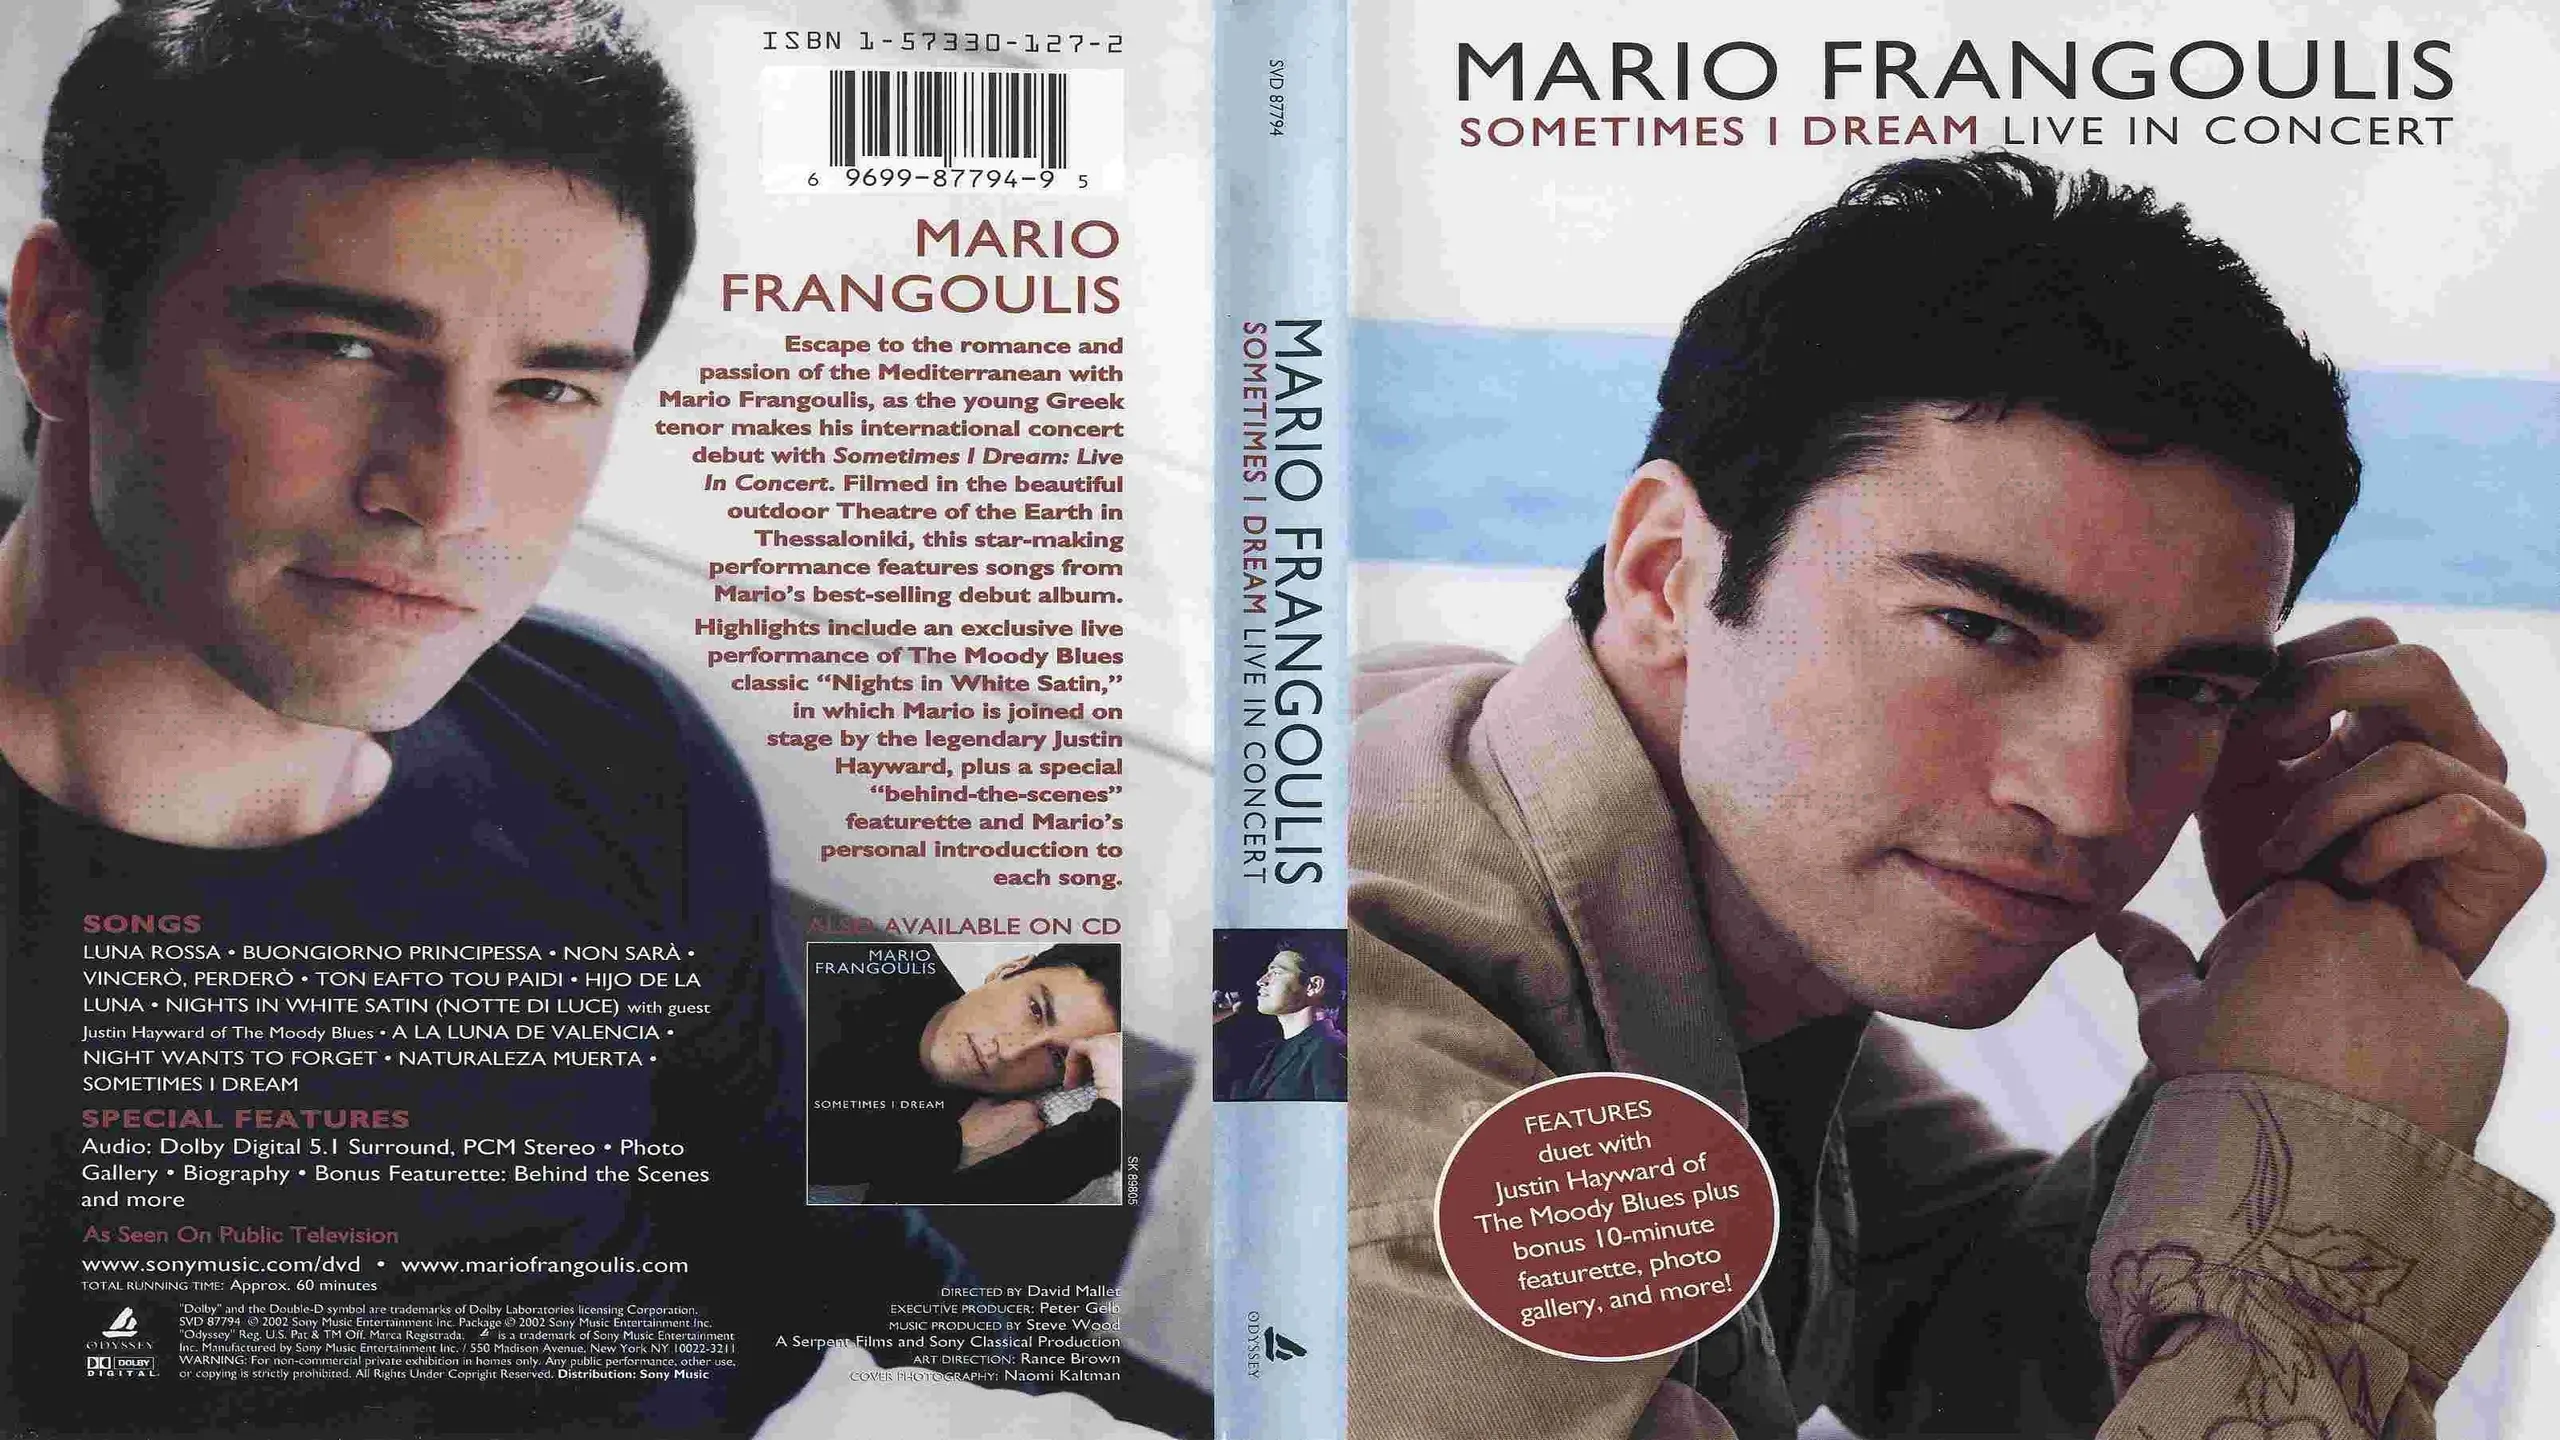 Mario Frangoulis - Sometimes I Dream (Live in Concert)